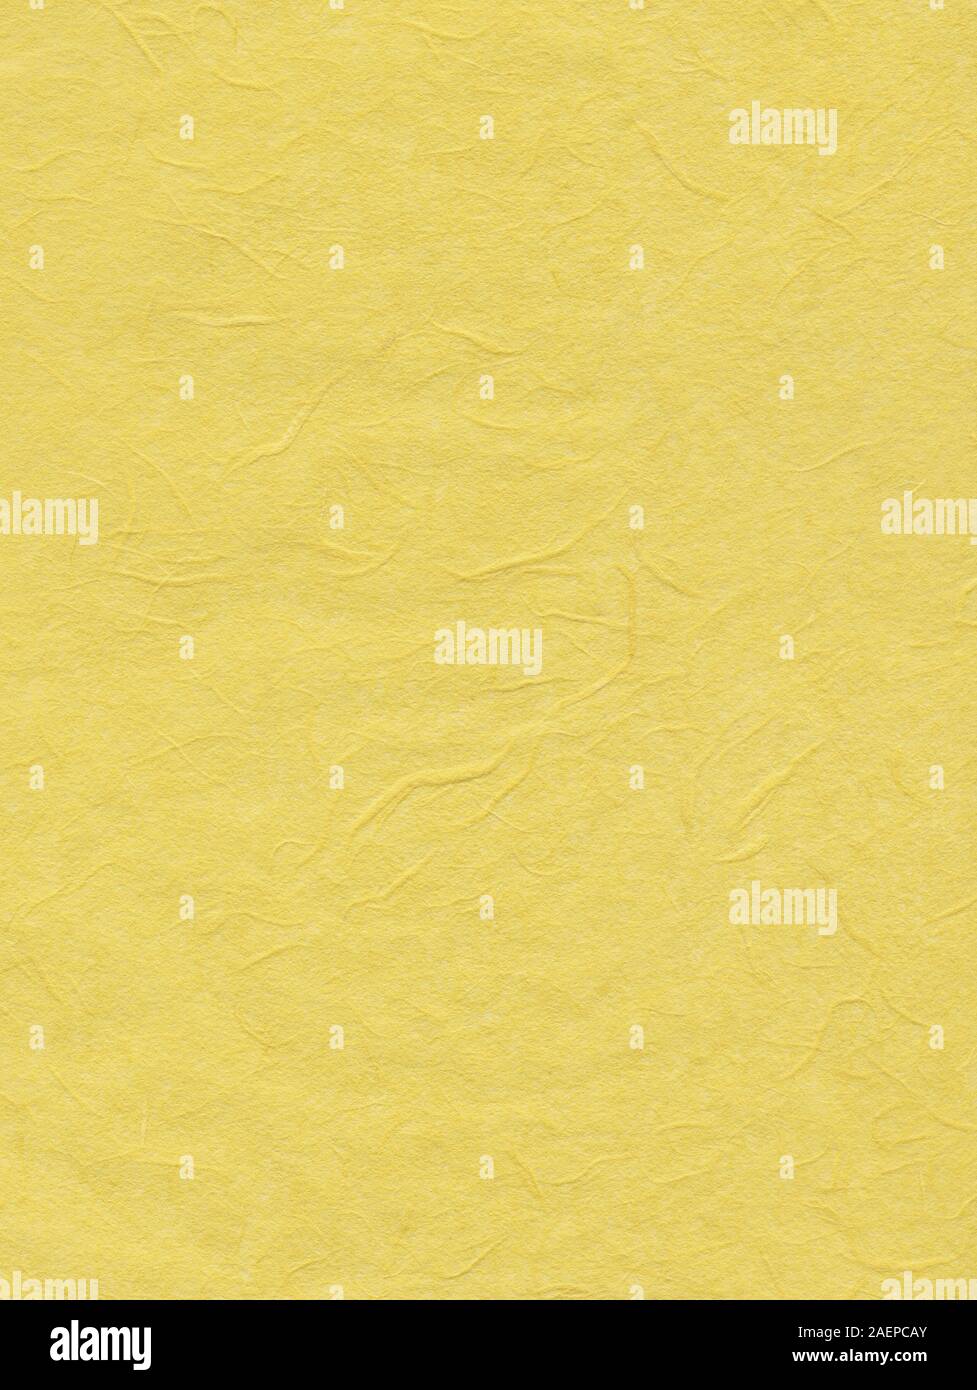 Yellow paper background Stock Photo